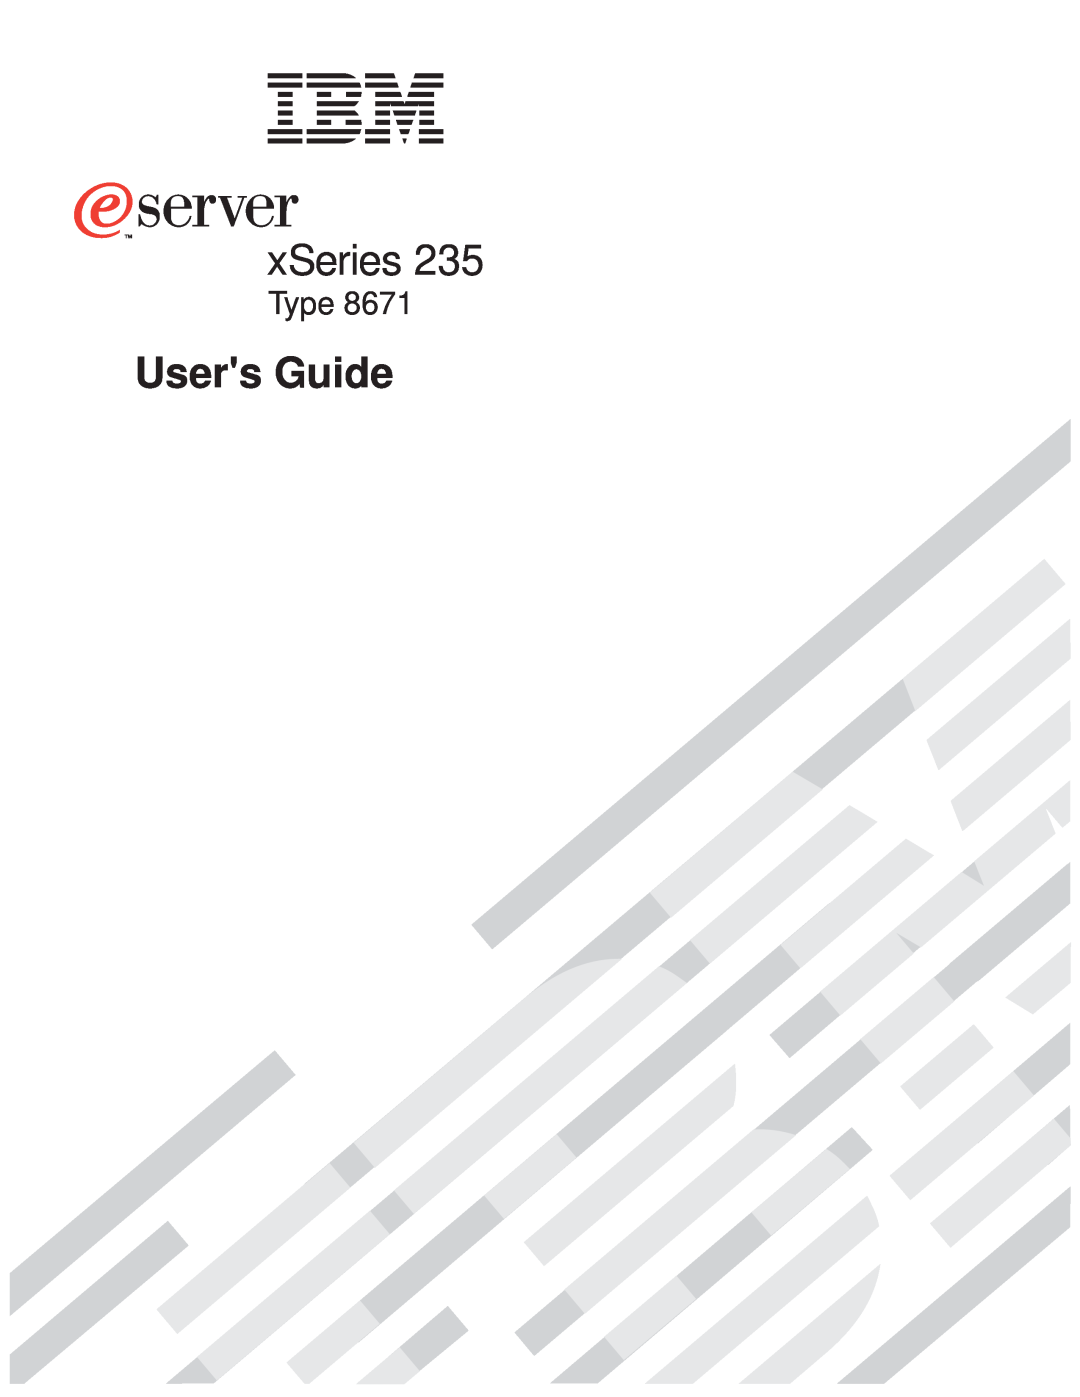 IBM xSeries 235 manual Users Guide, Type 